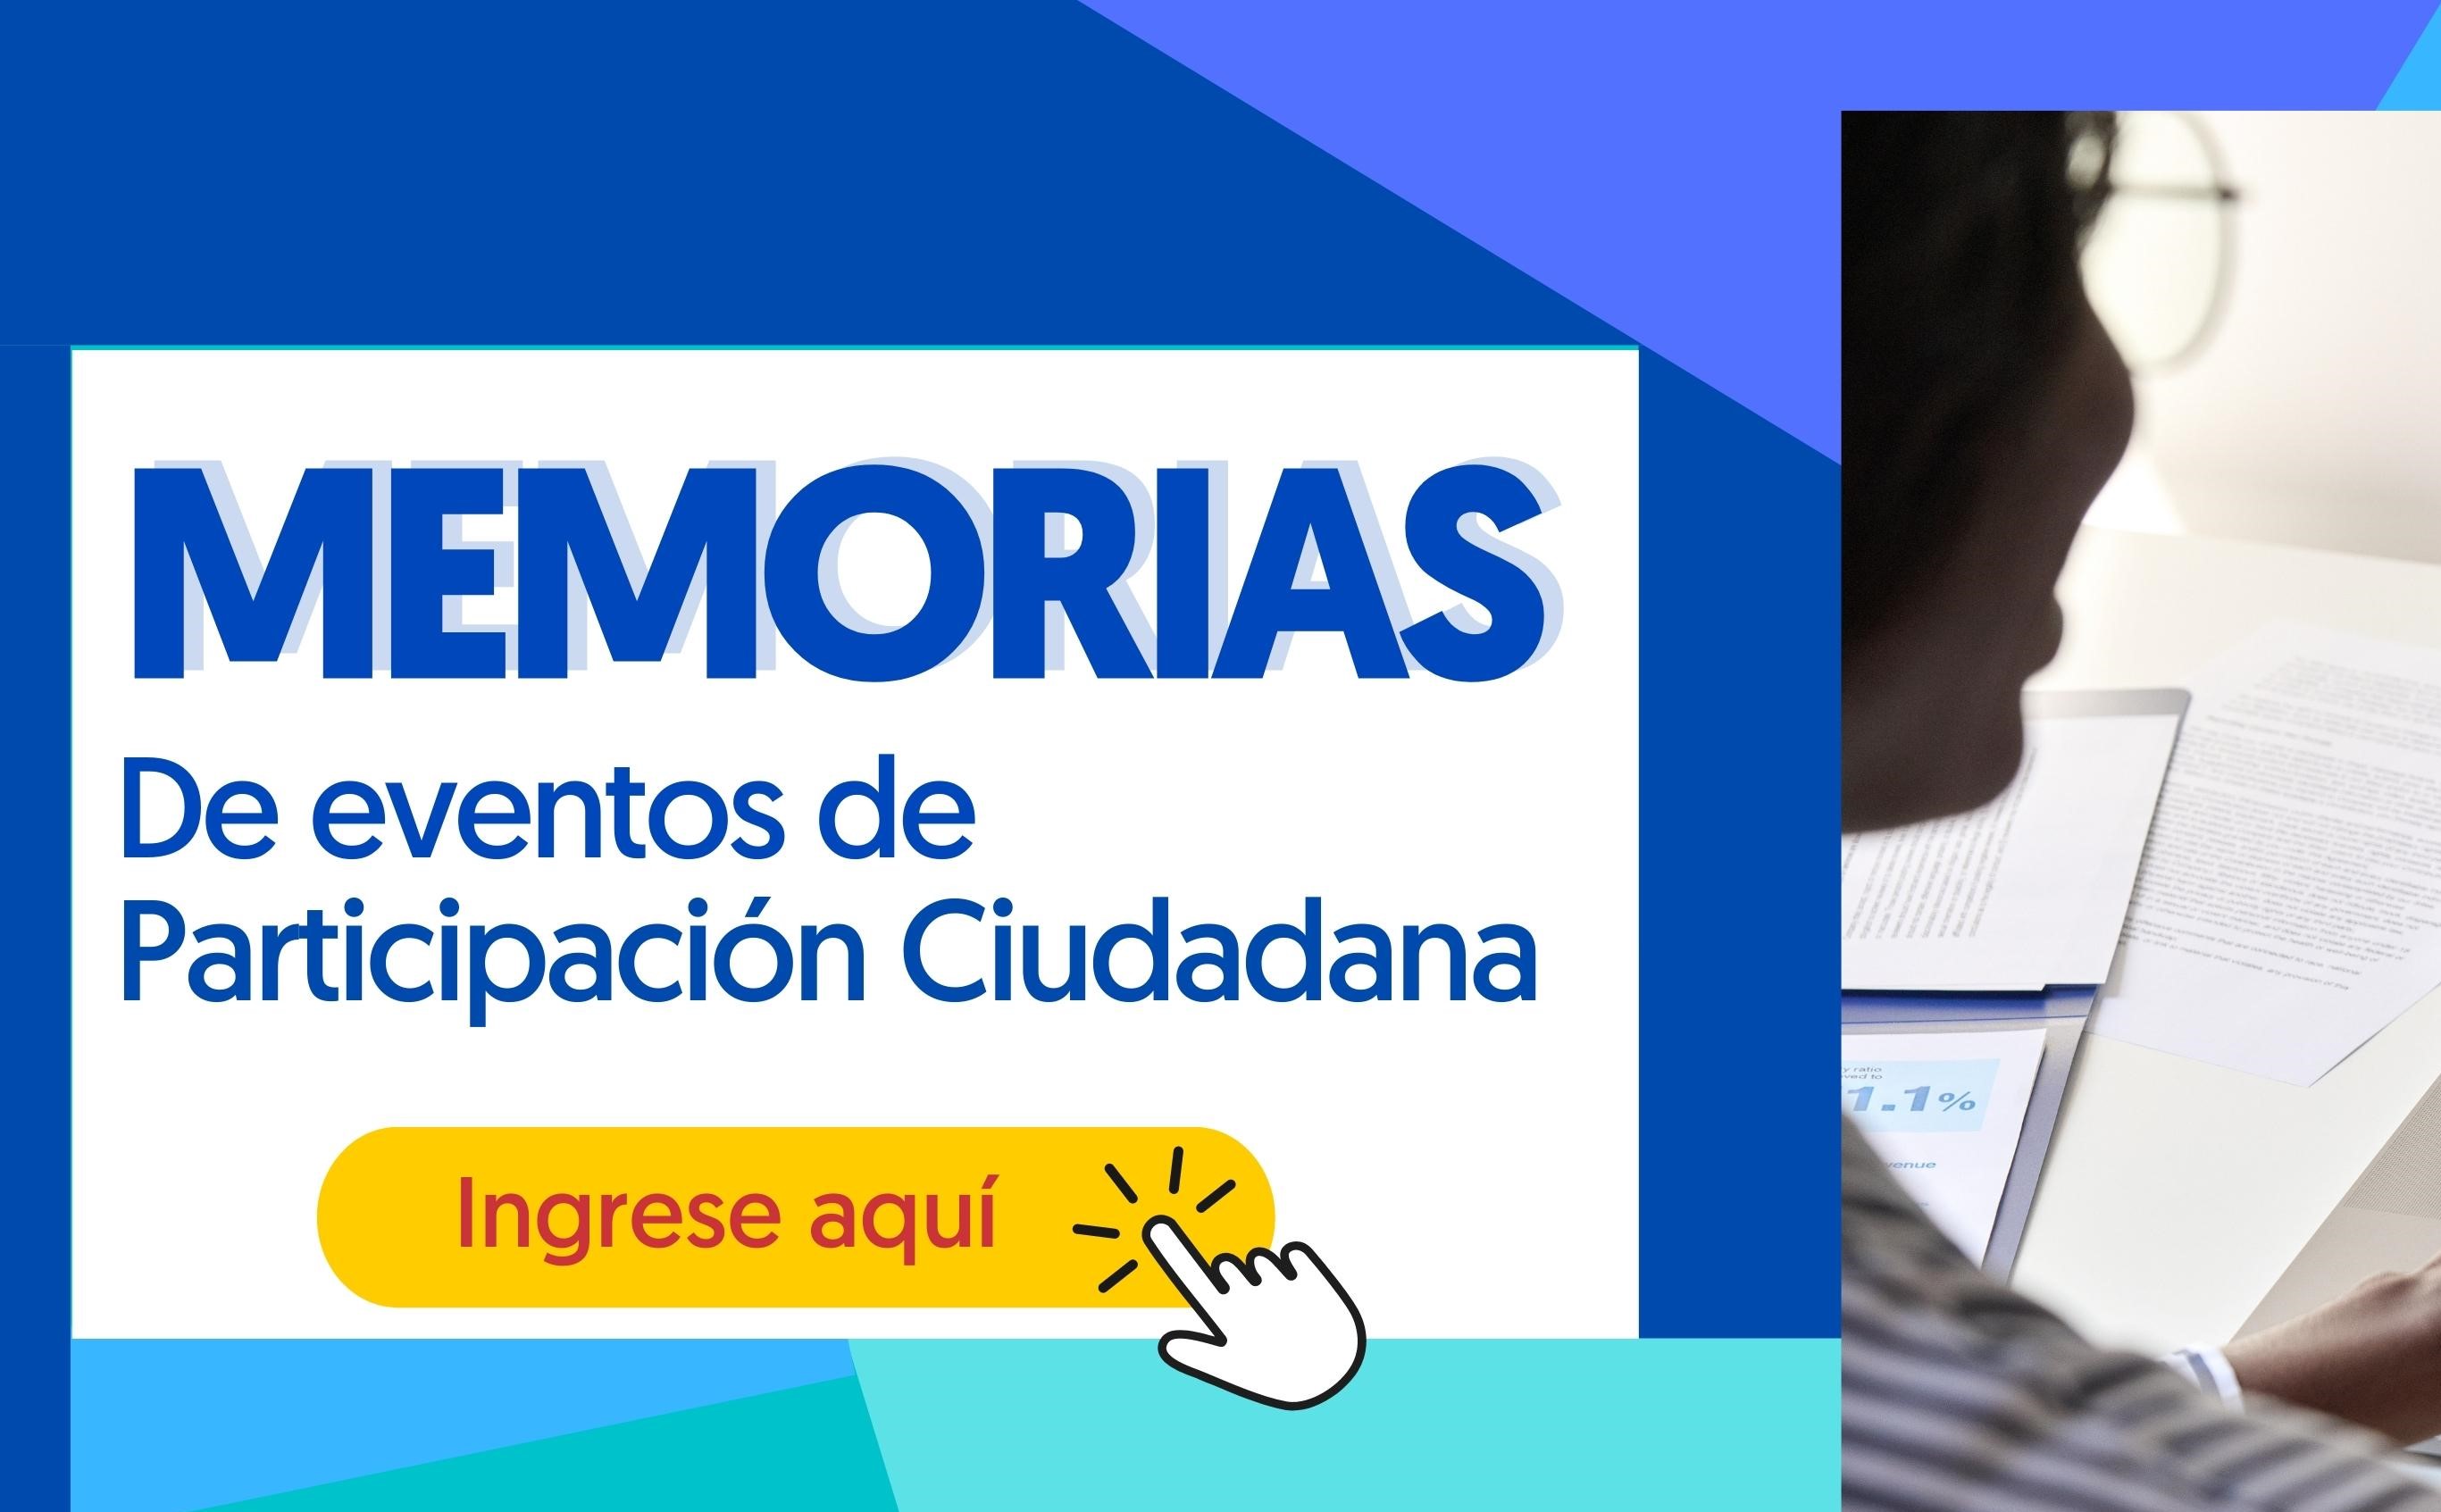 Imagen botón: Memorias participación ciudadana